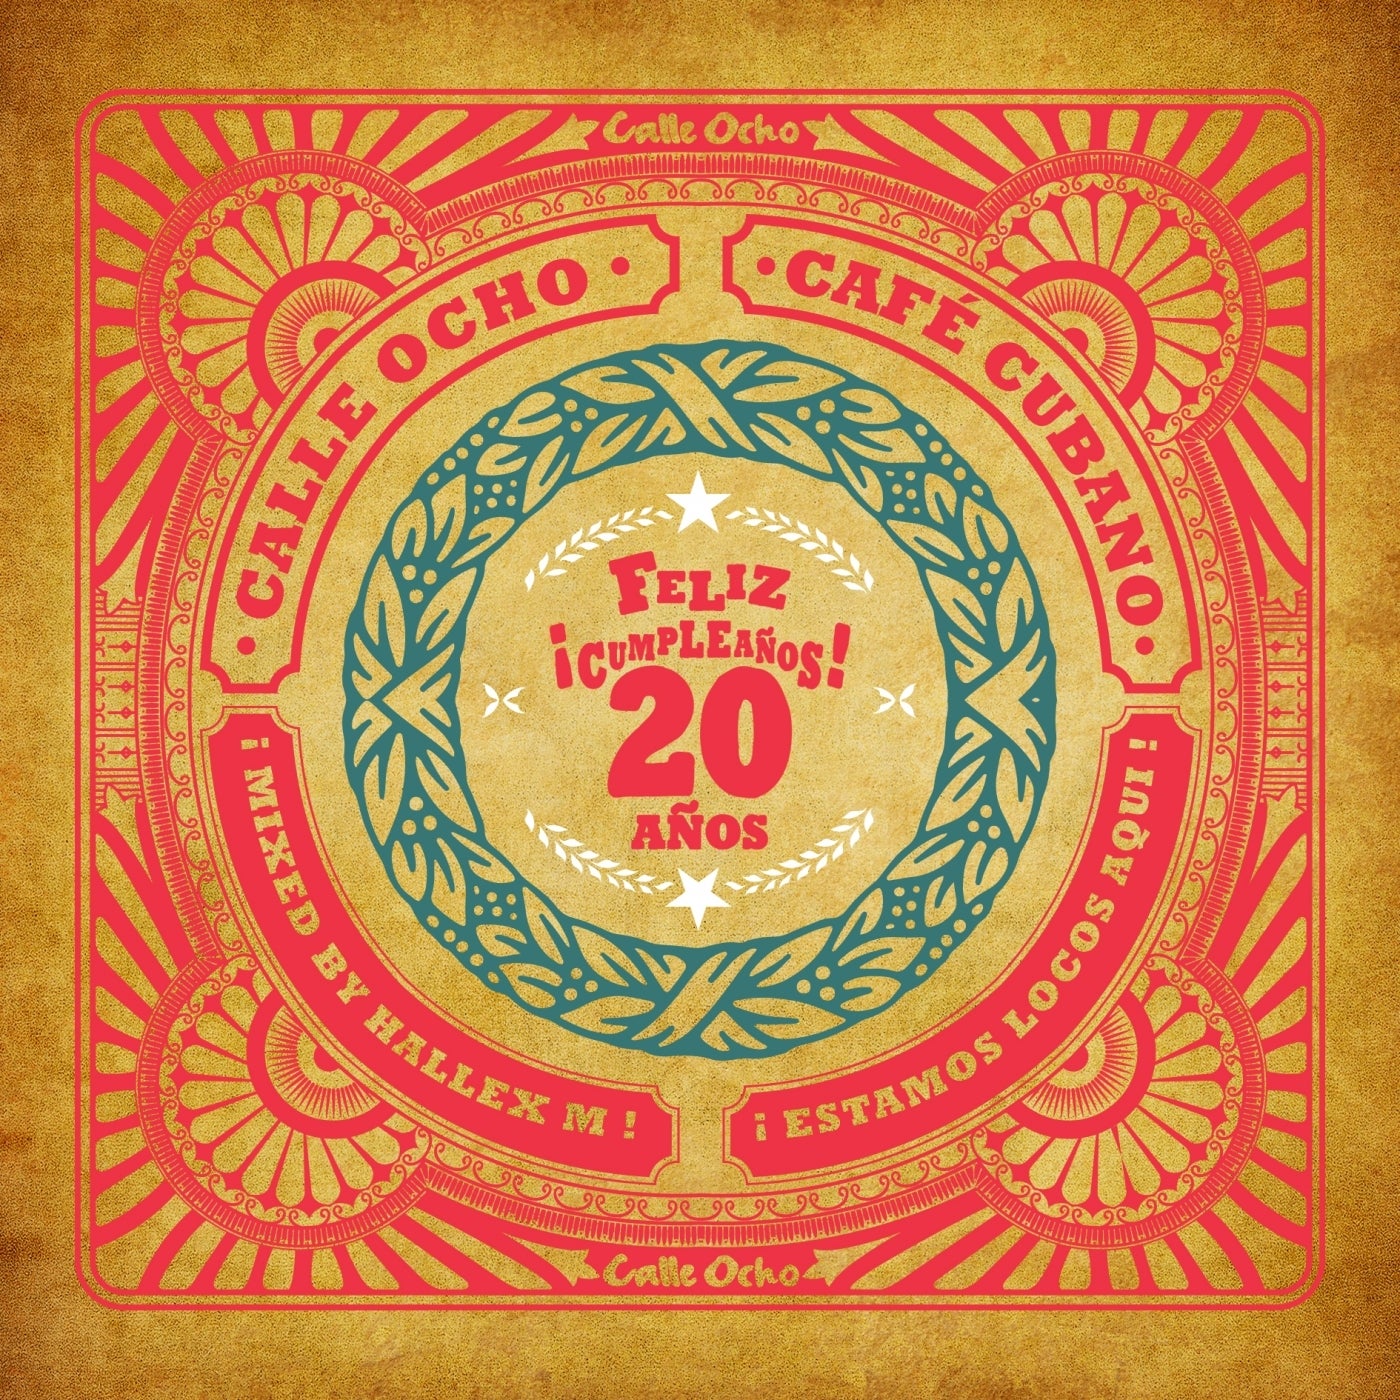 Calle Ocho Cafe Cubano (Feliz Cumpleanos 20 Anos)